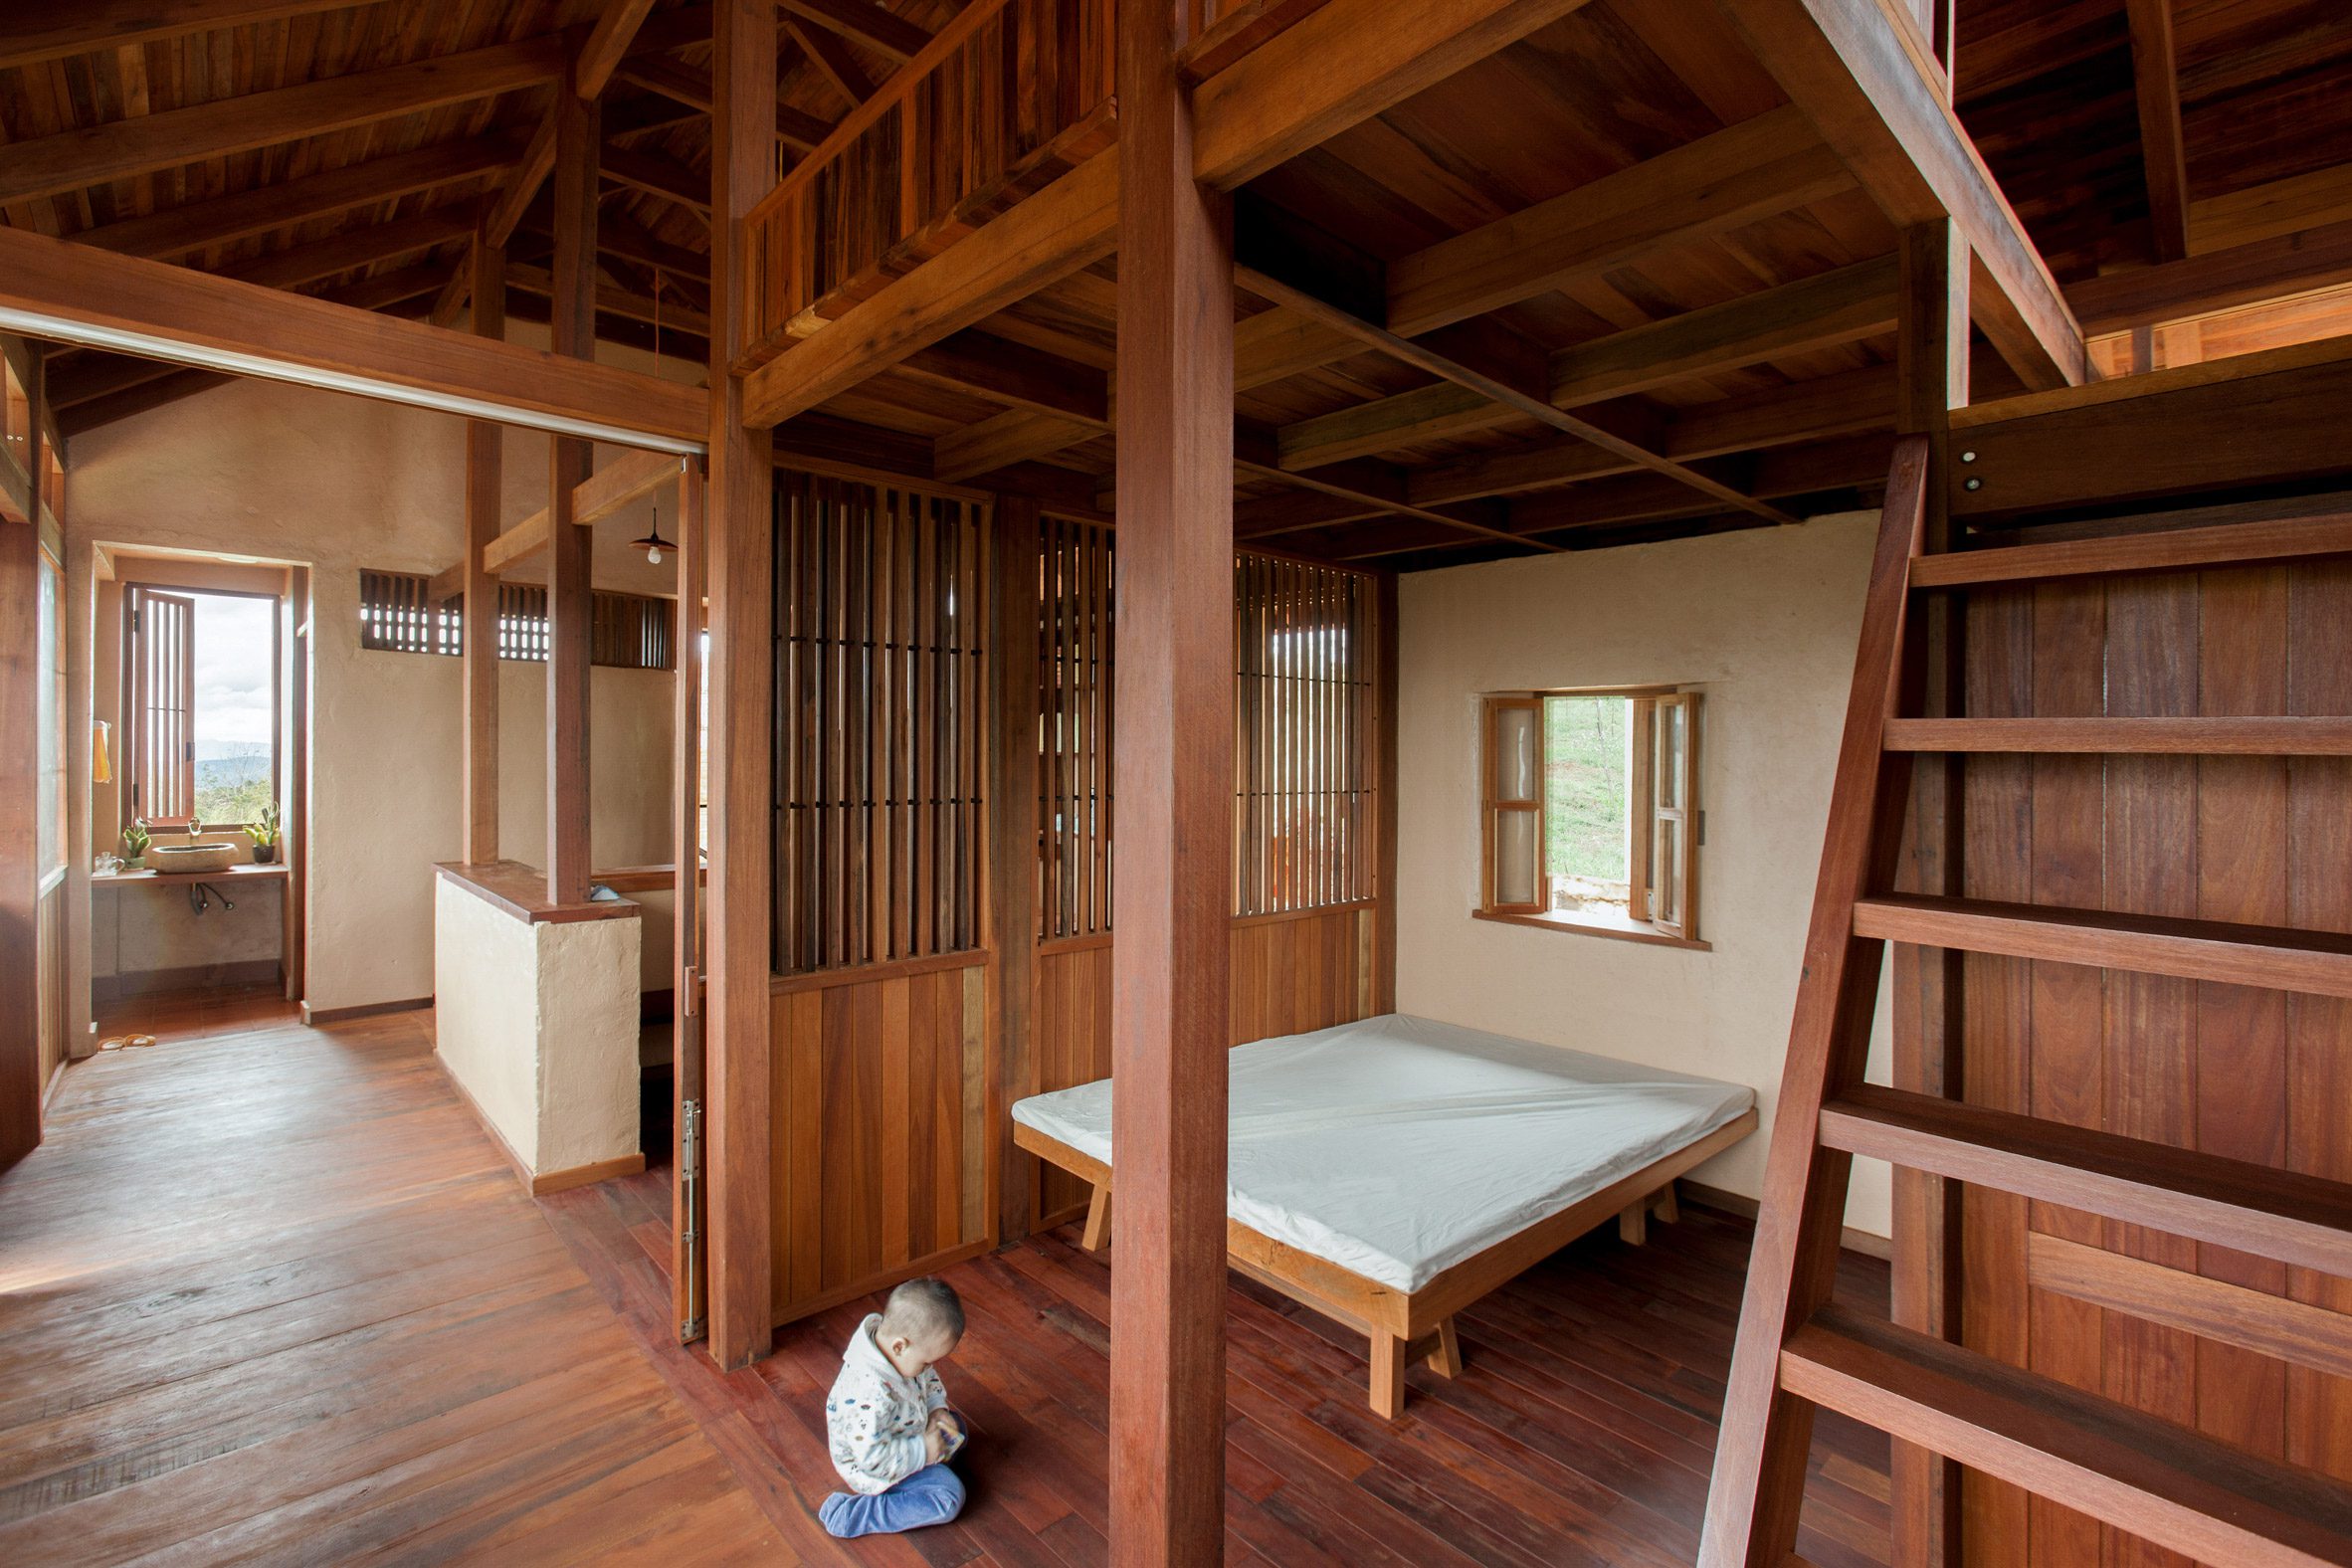 Bedroom interior at Di Linh House in Vietnam